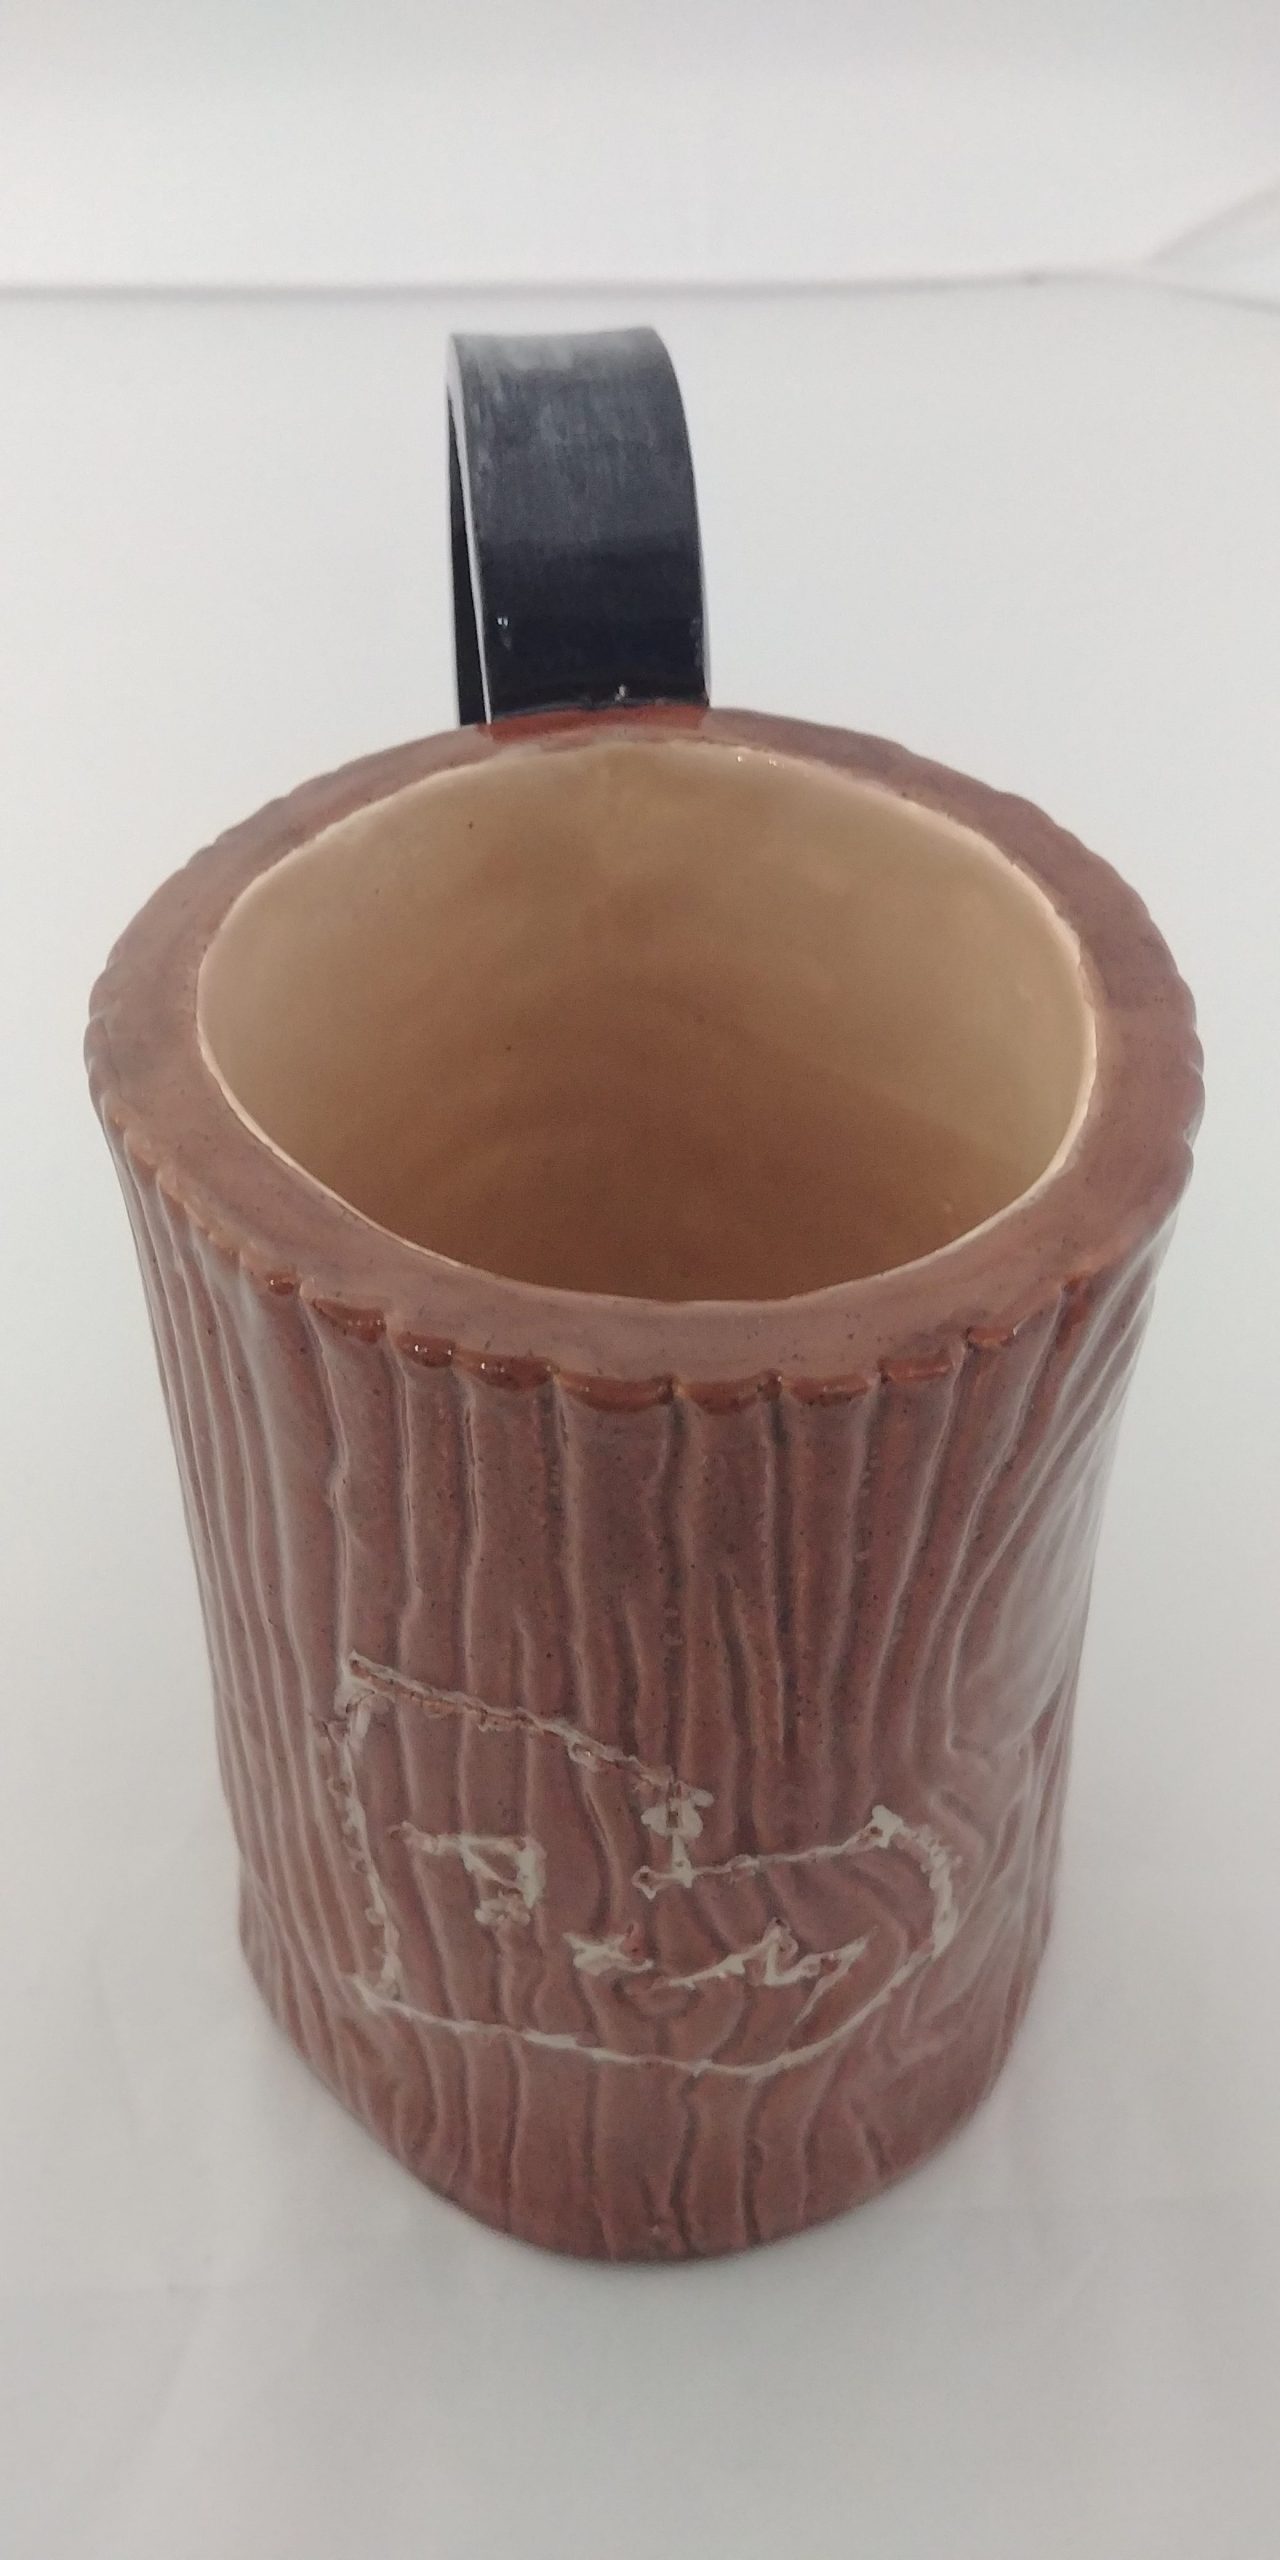 Intro to Ceramic Clay Modeling - Heart Mug